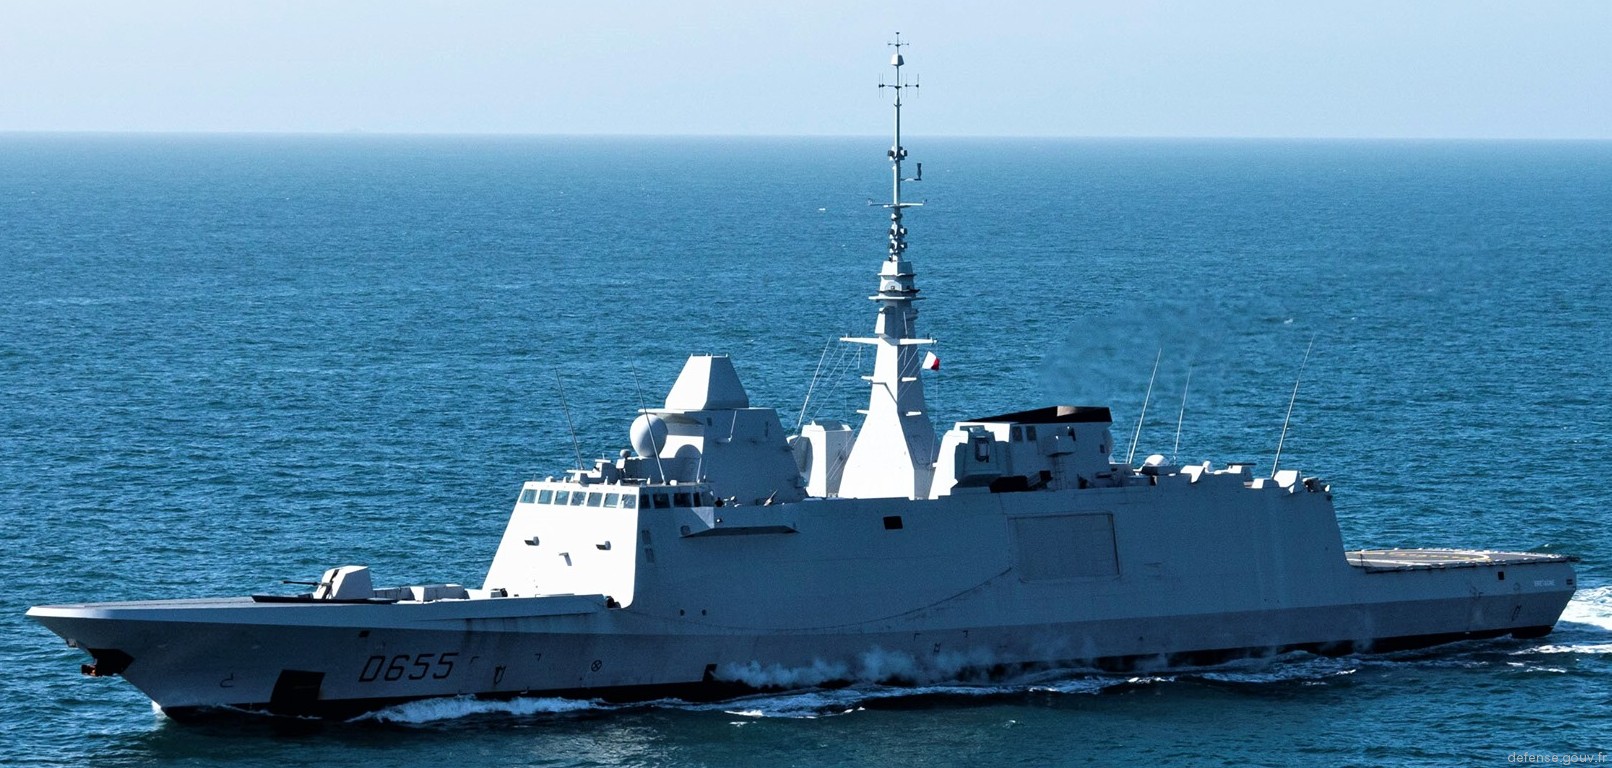 d-655 fs bretagne fremm aquitaine class frigate fregate multi purpose french navy marine nationale 21